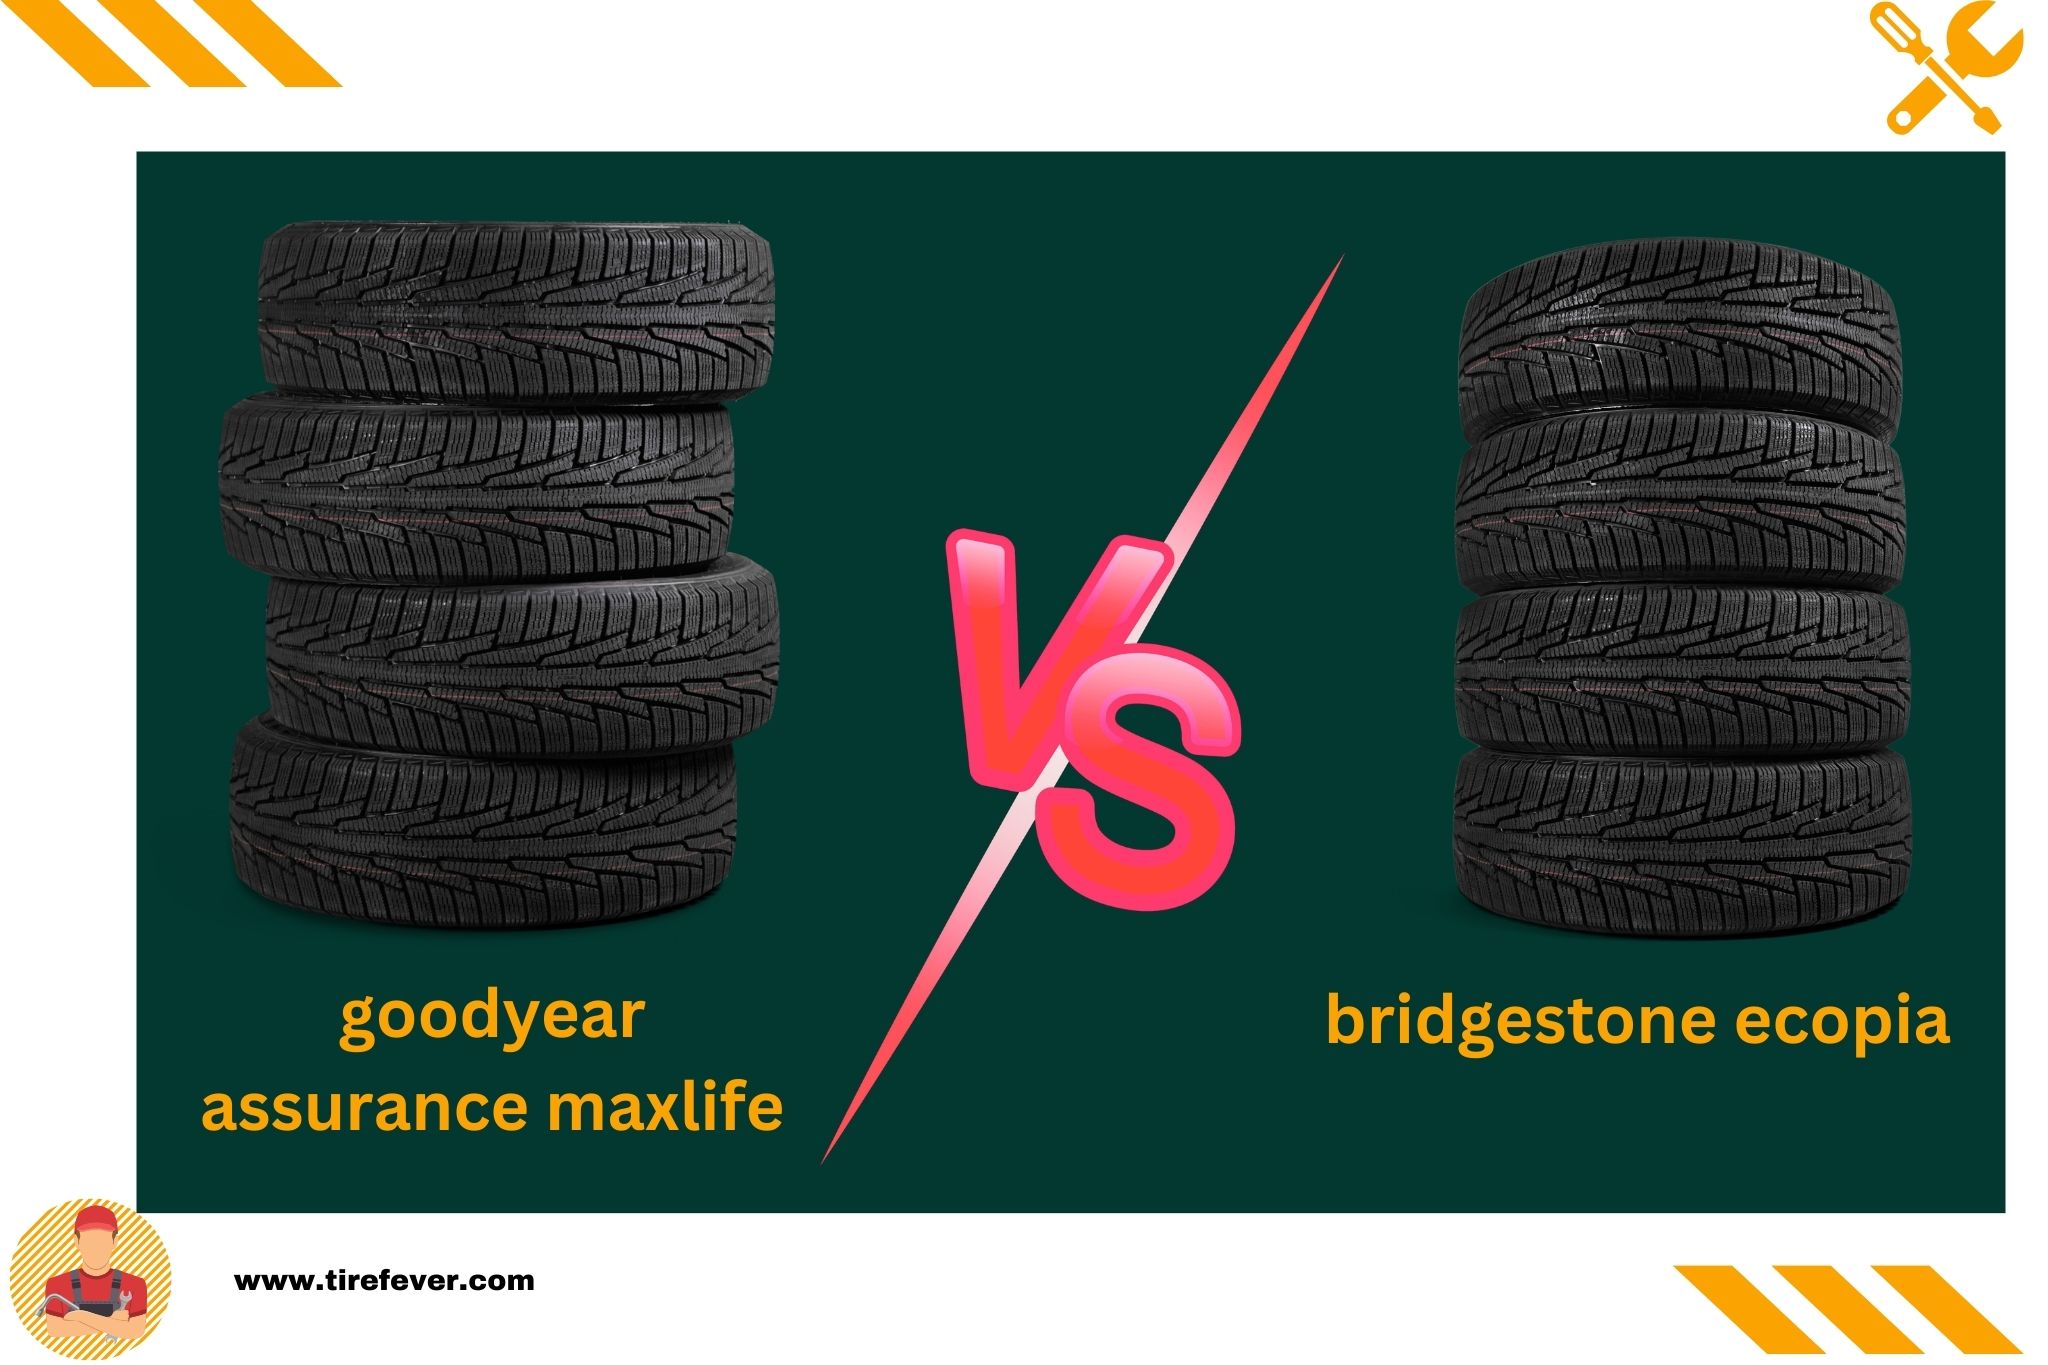 goodyear assurance maxlife vs bridgestone ecopia